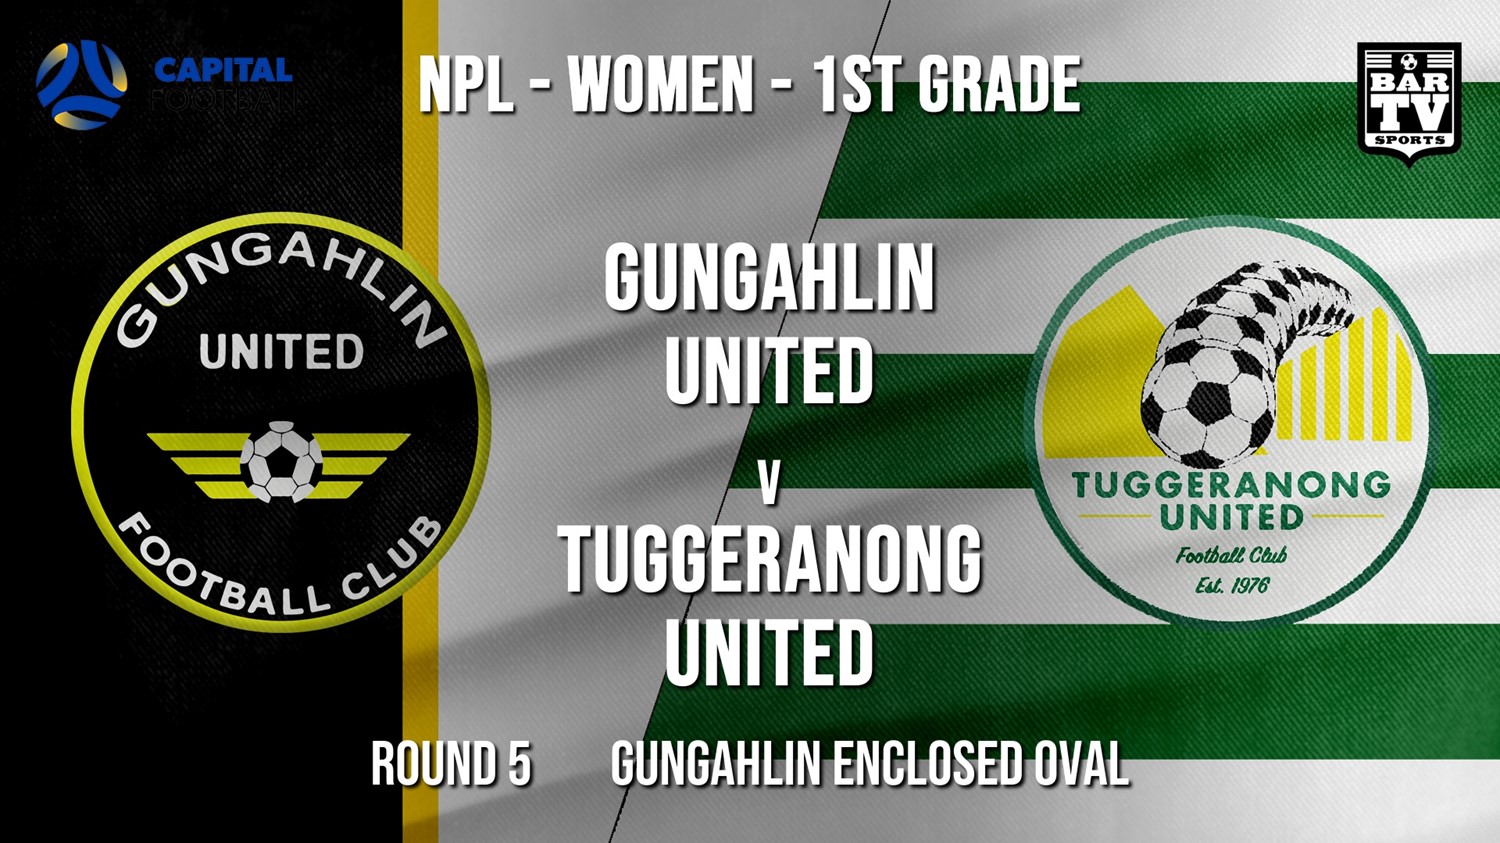 NPLW - Capital Round 5 - Gungahlin United FC (women) v Tuggeranong United FC (women) Minigame Slate Image